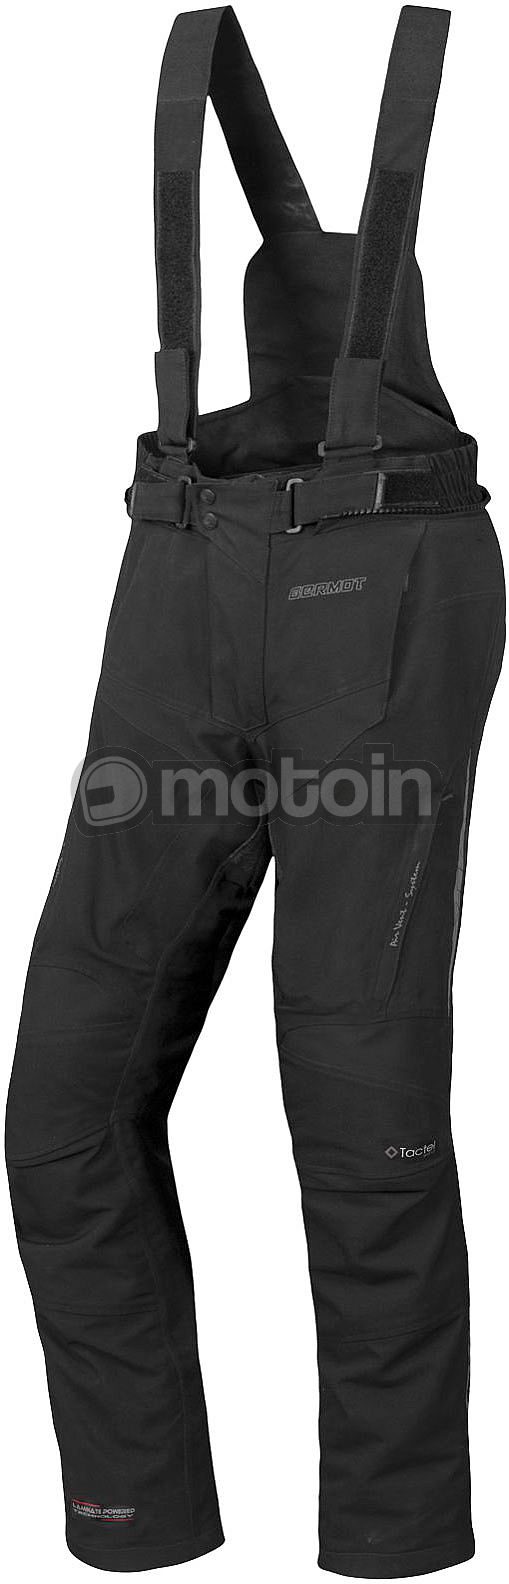 Germot MotoQueen, pantaloni tessili donne impermeabili